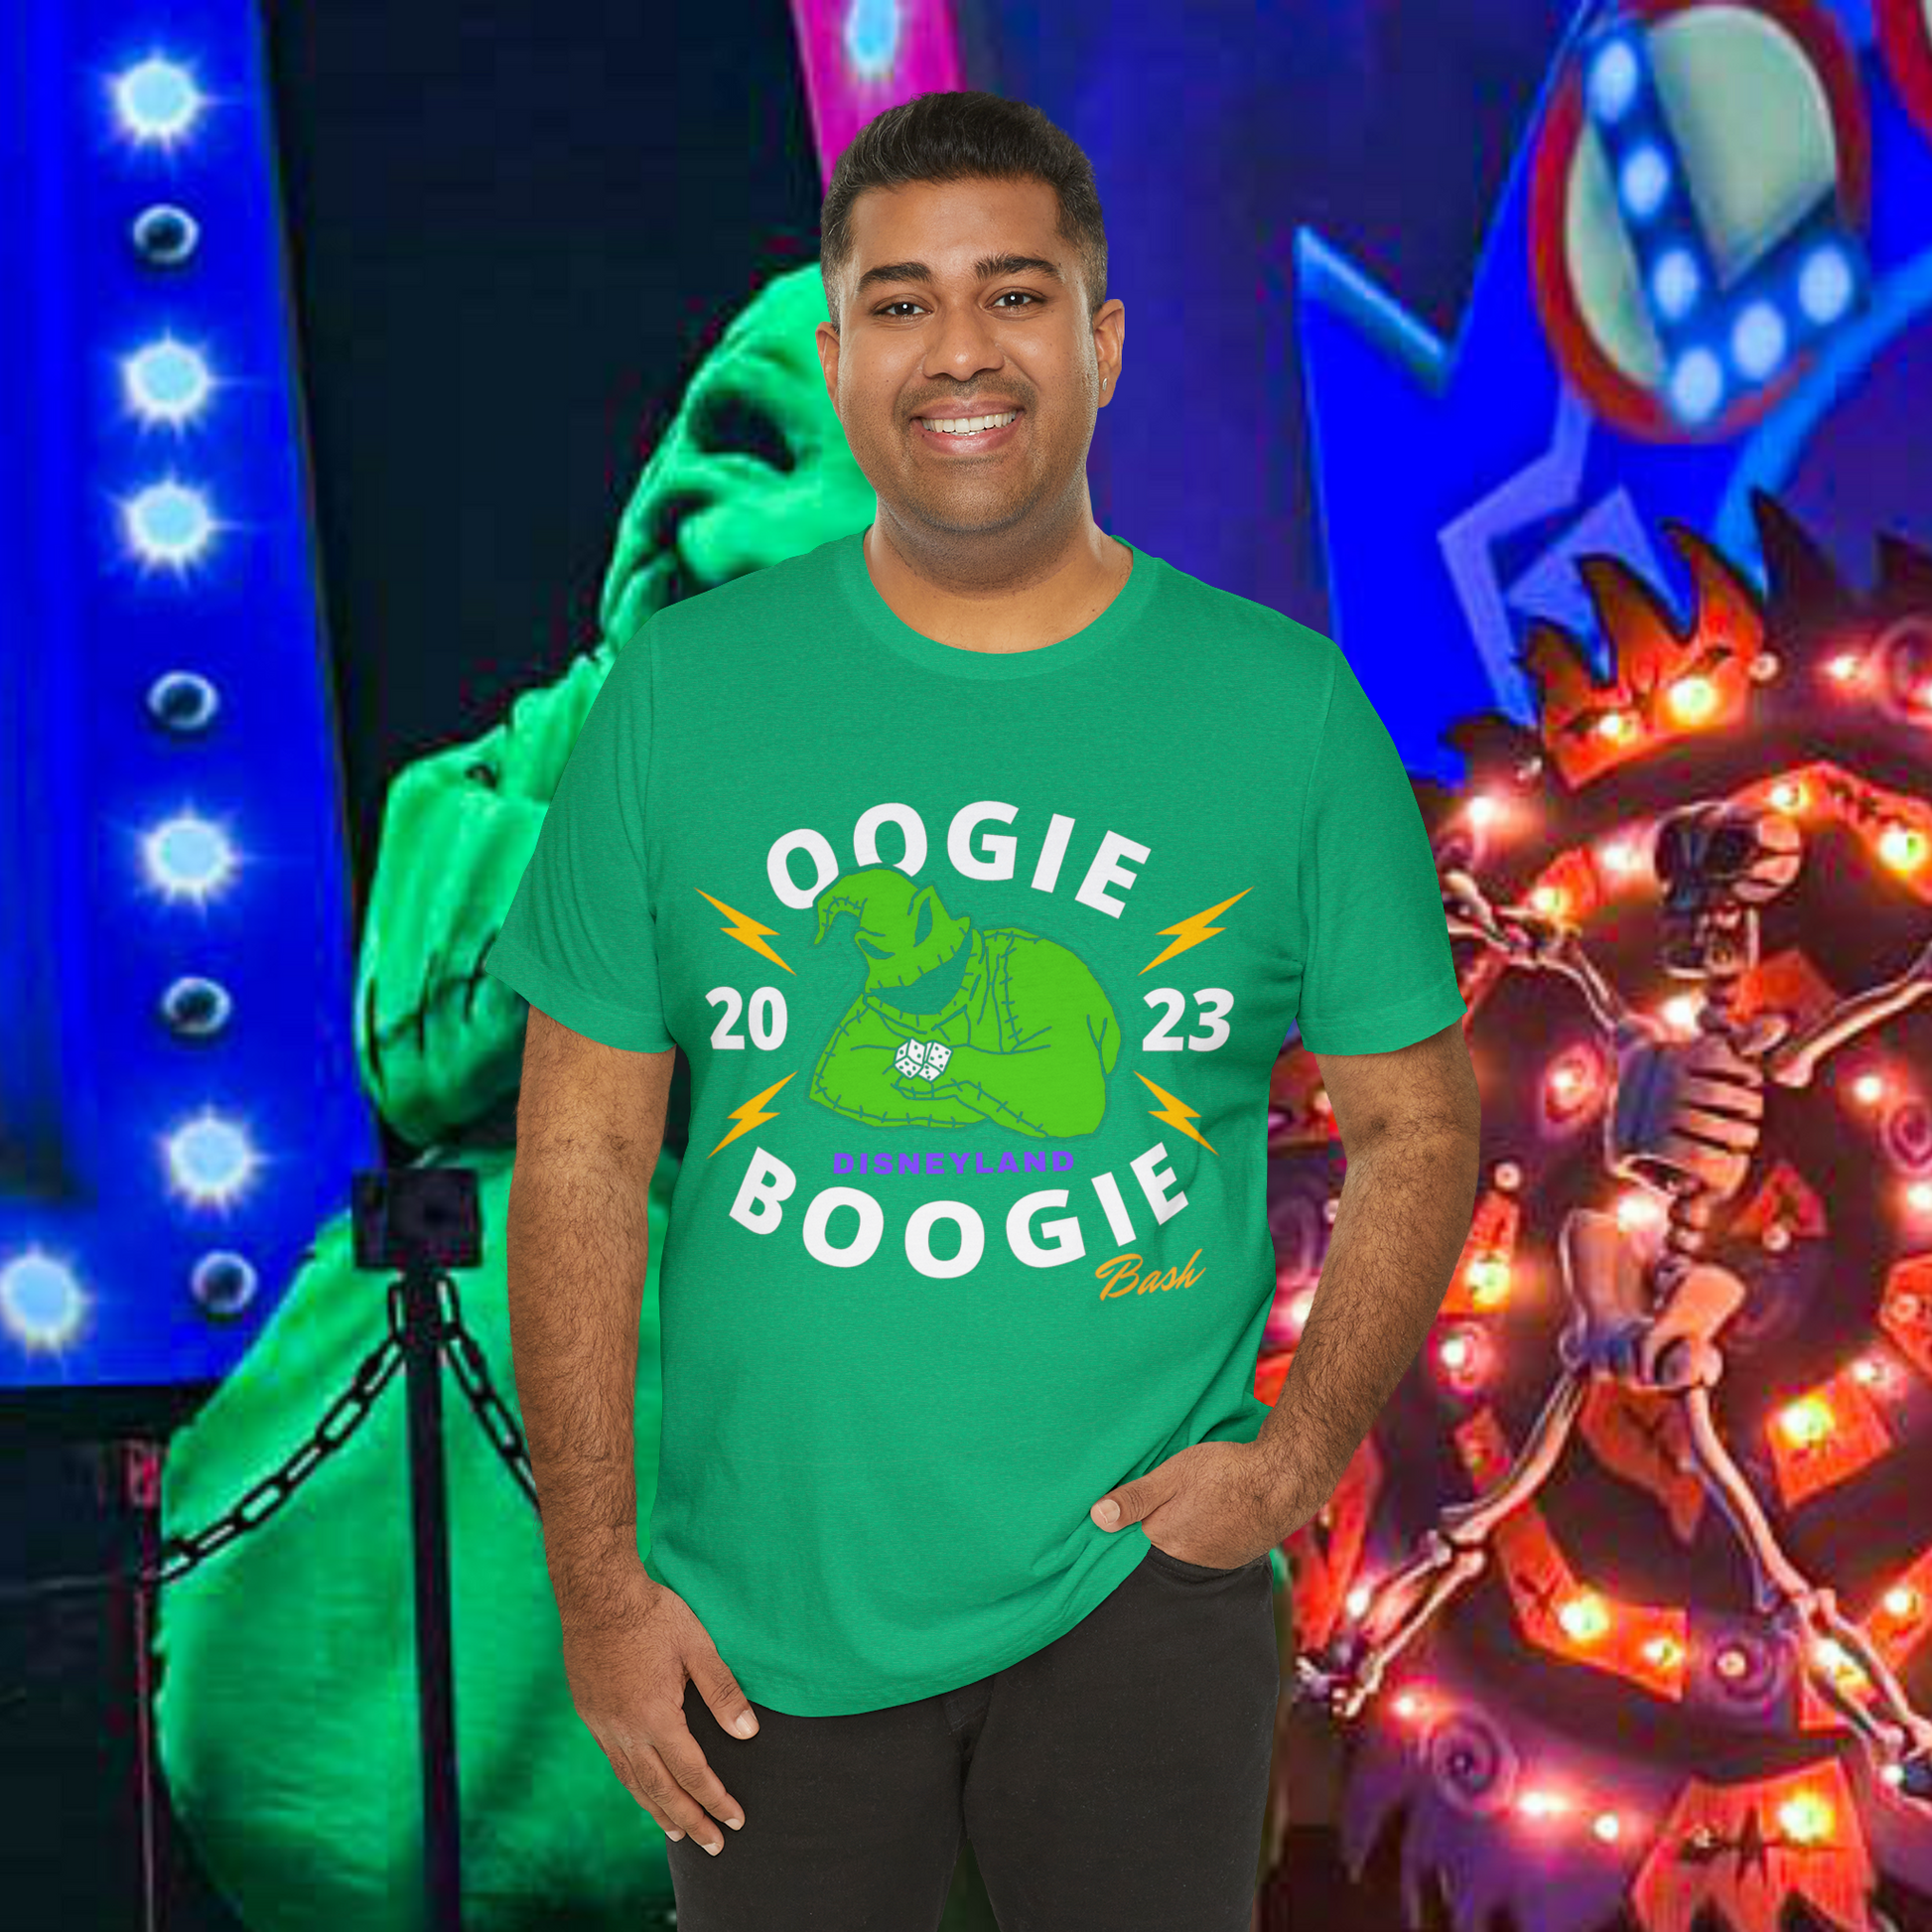 Oogie Boogie Bash 2023 t shirt